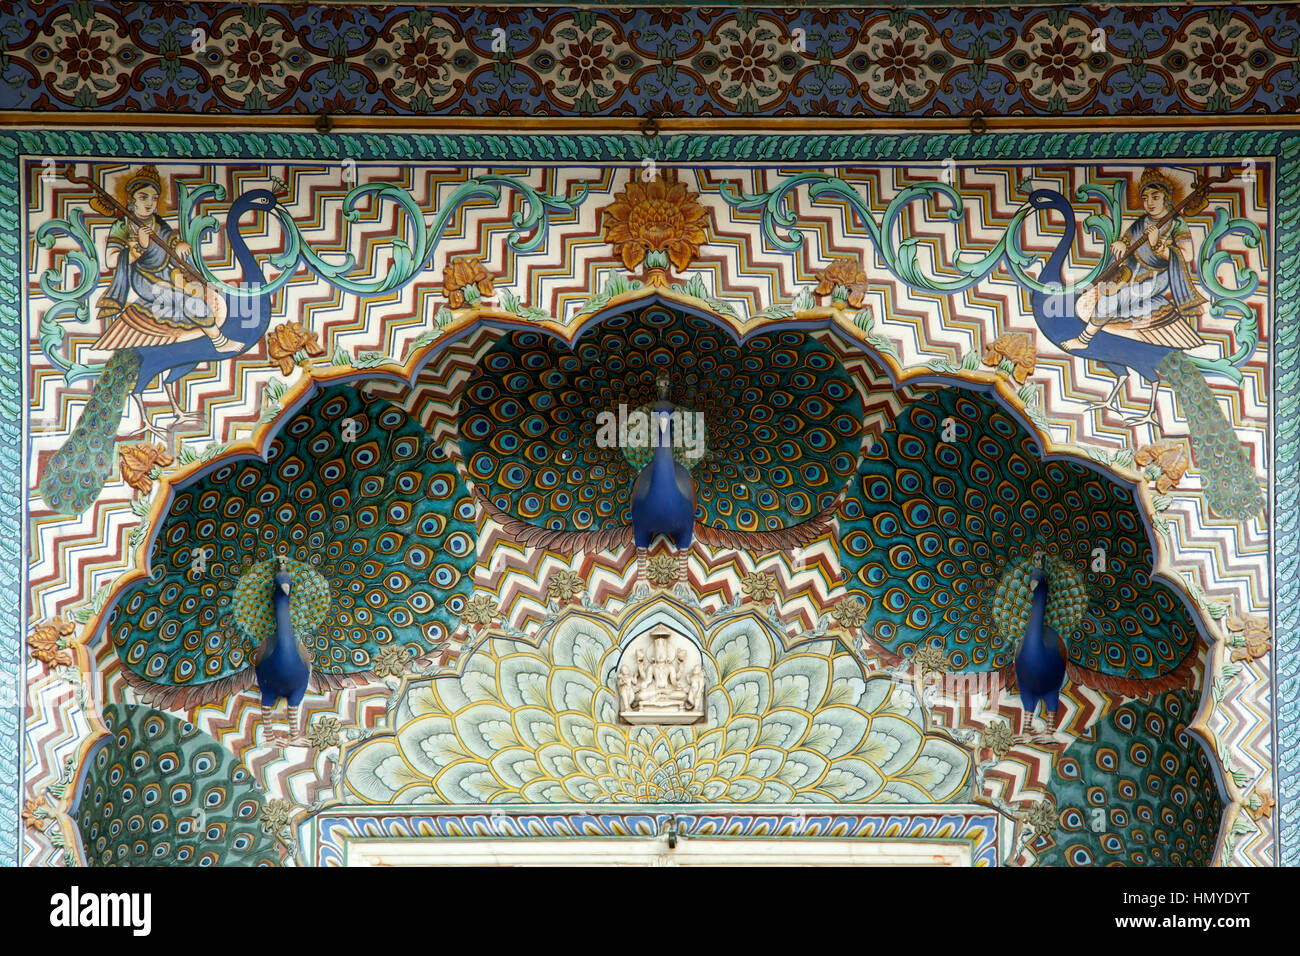 Peacocks above door, Chandra Mahal building, City Palace, Jaipur, Rajasthan, India Stock Photo